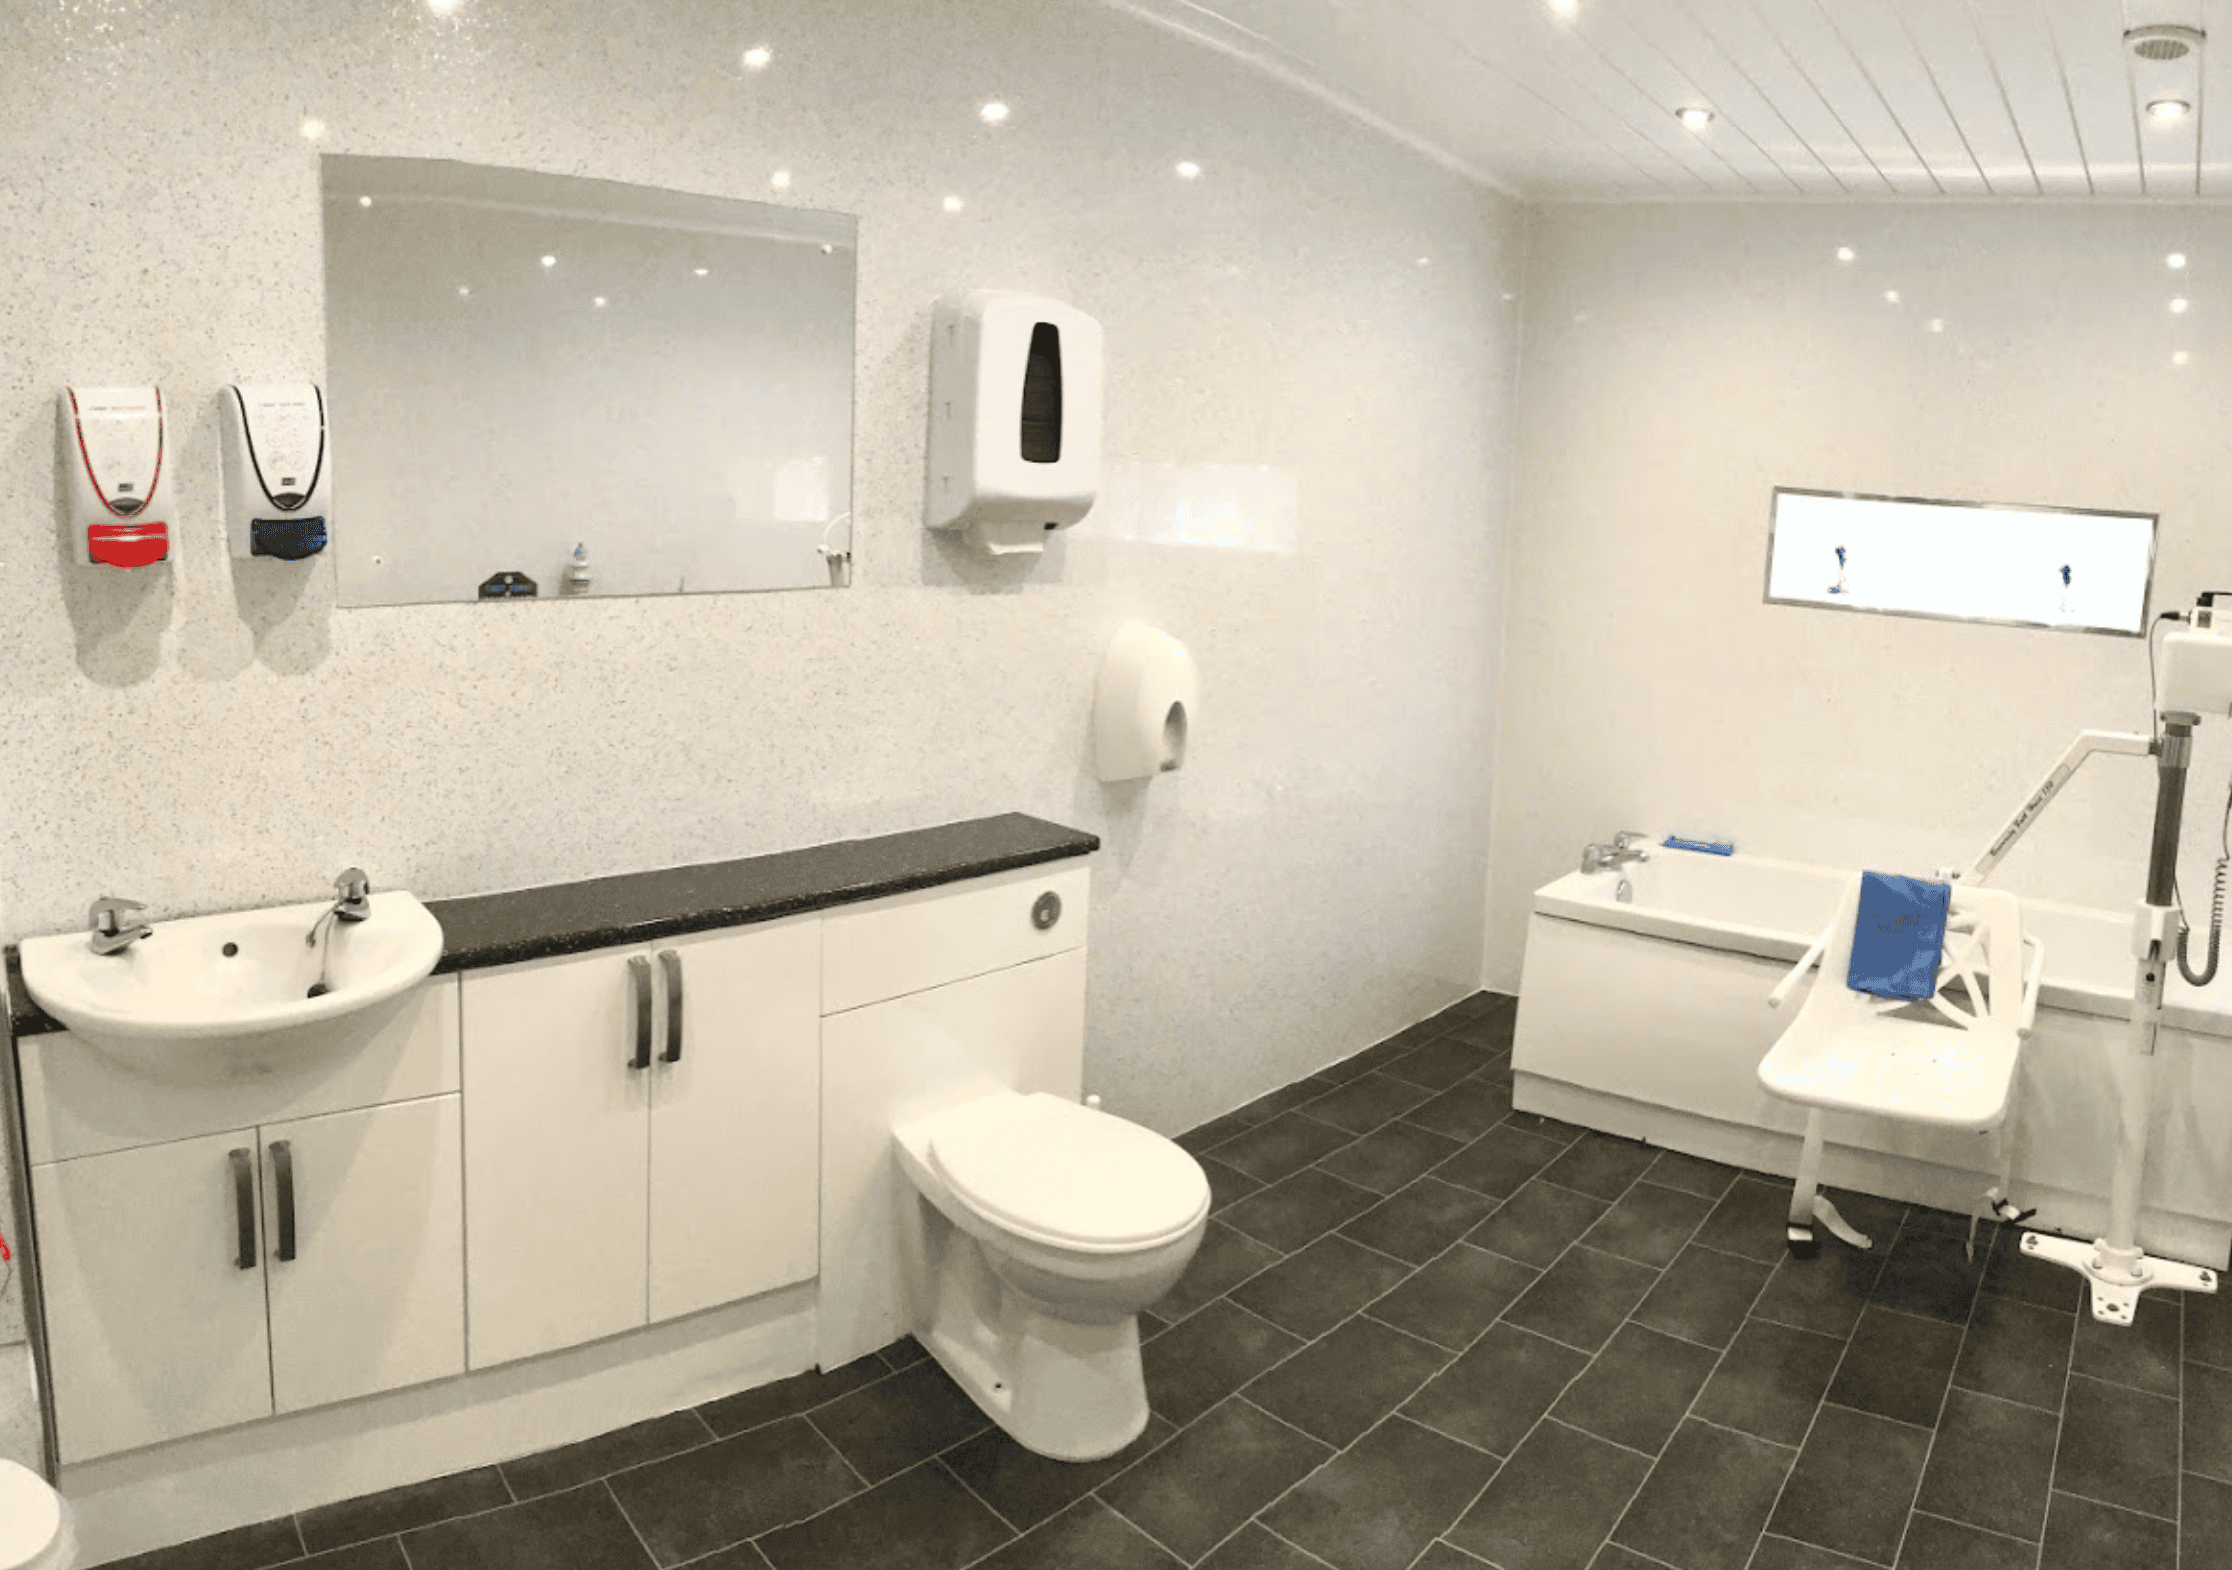 Bathroom of Burnfoot care home in Ayr, Scotland